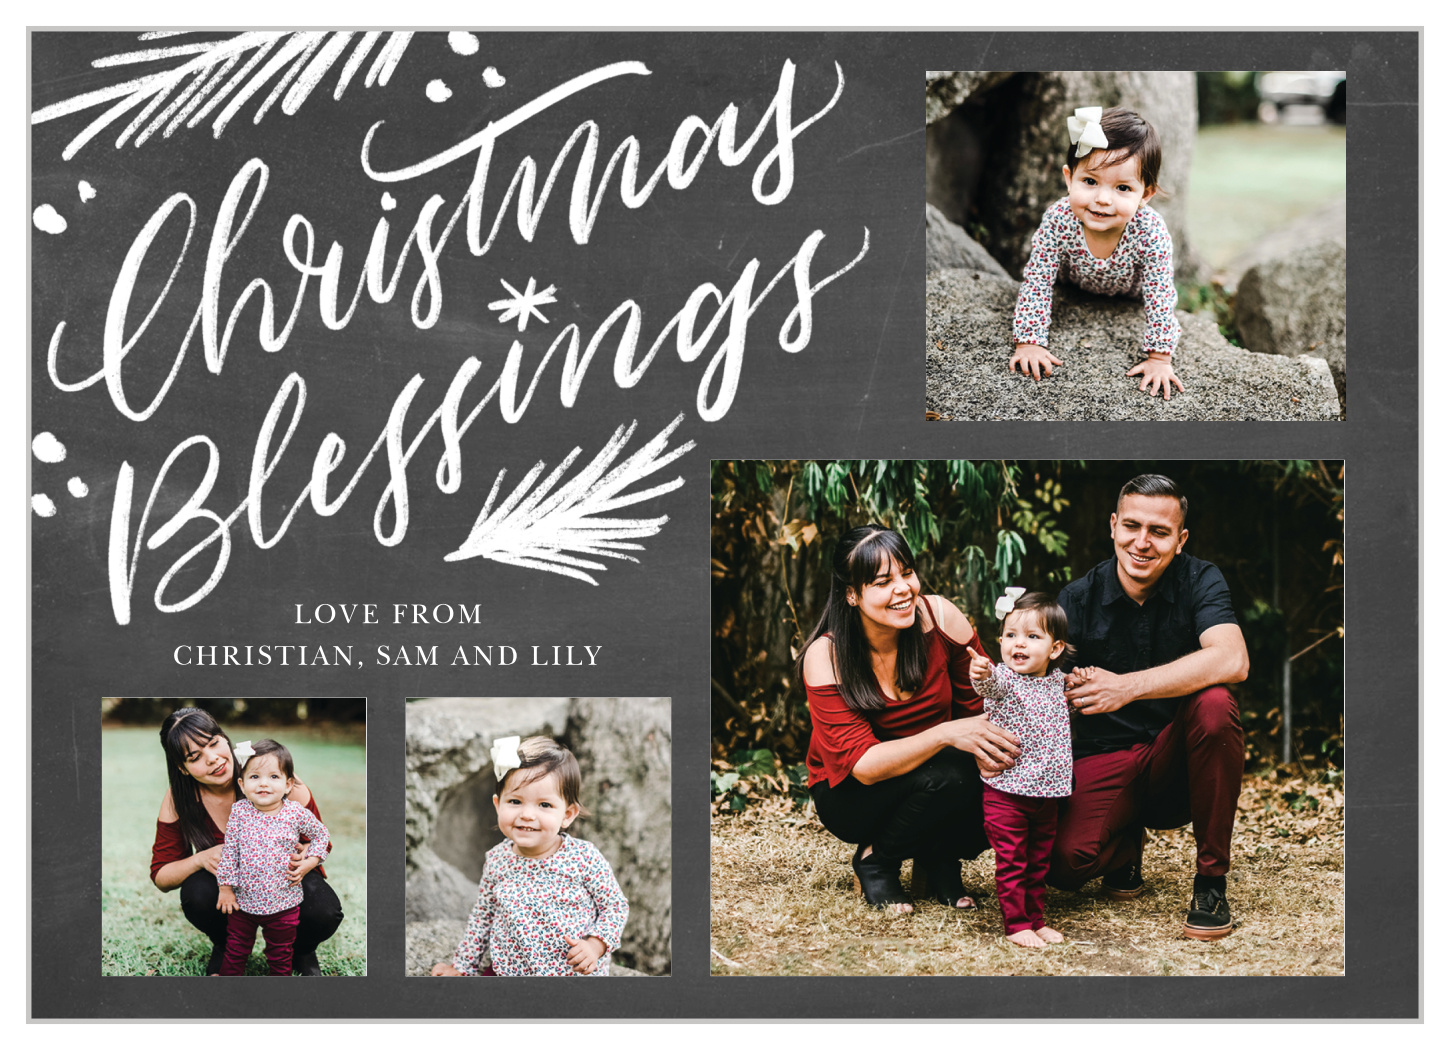 Evergreen Blessings Christmas Cards